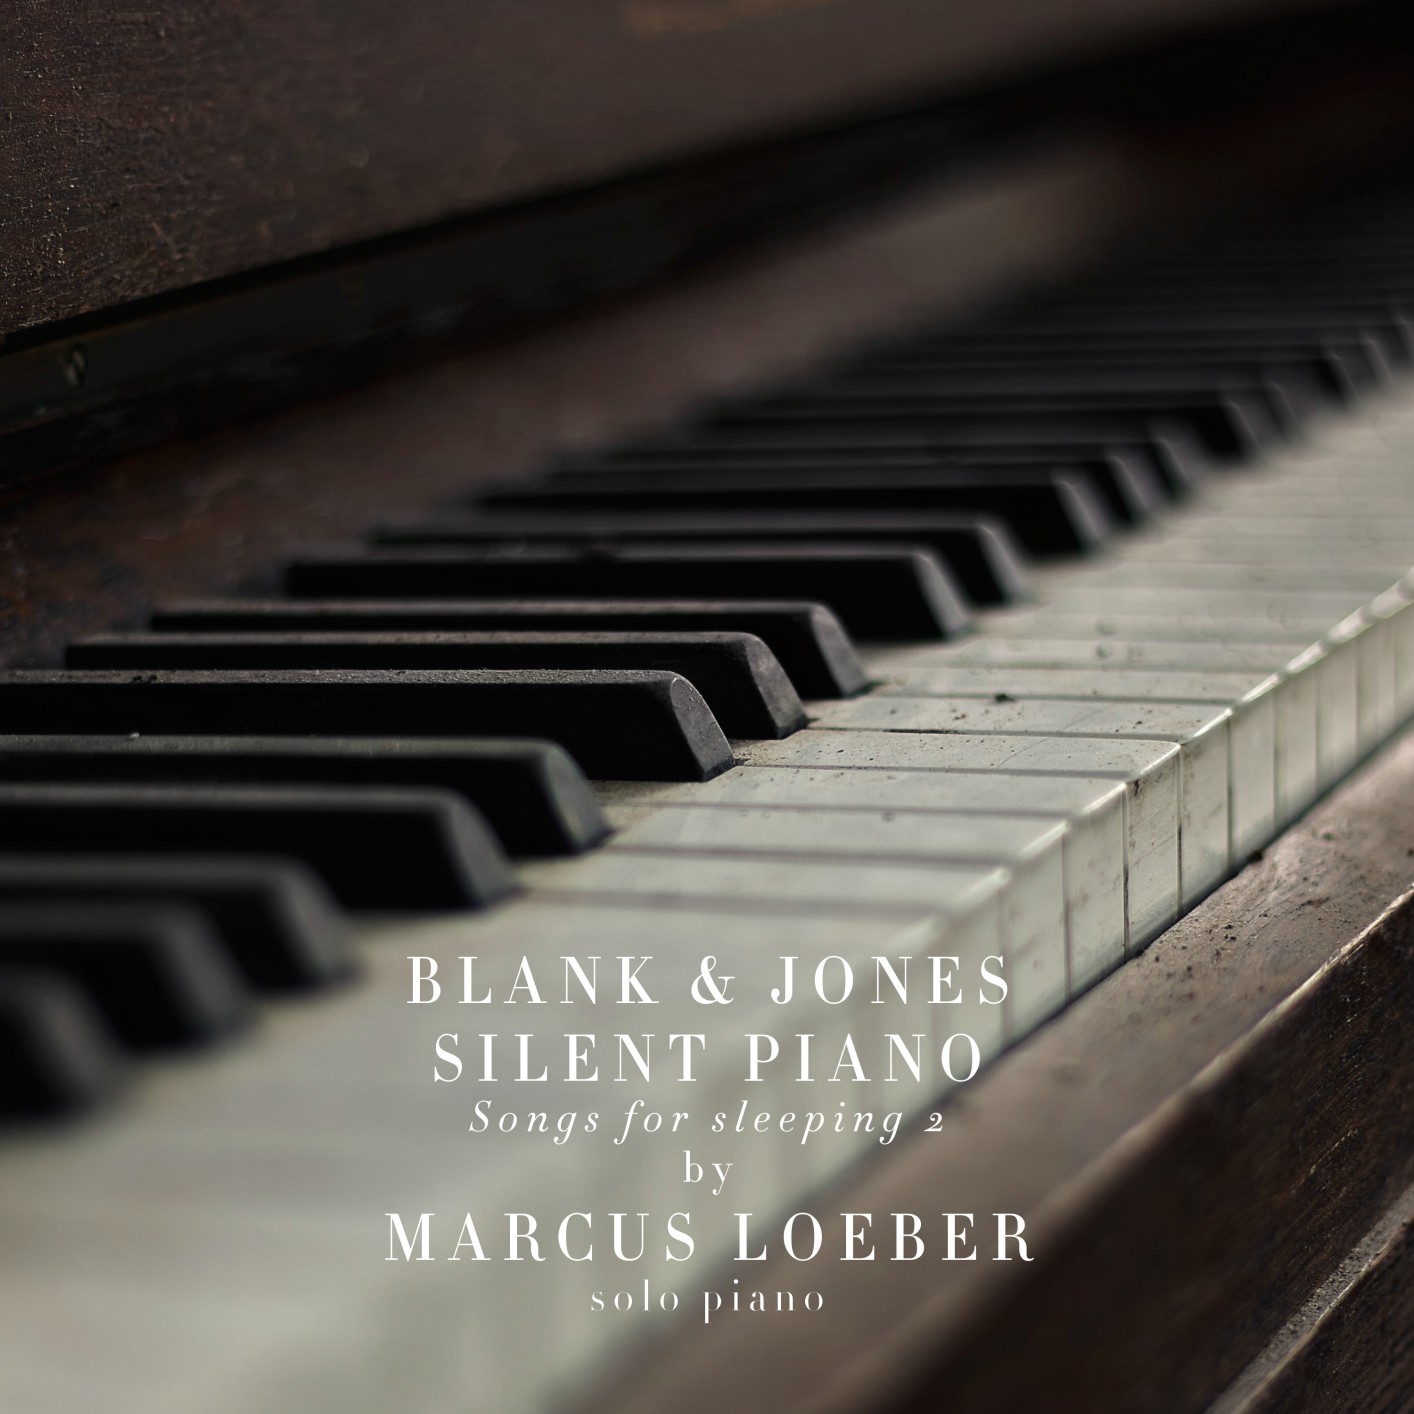 Blank & Jones, Marcus Loeber – Silent Piano (Songs for Sleeping) 2 (2018) [FLAC 24bit/96kHz]